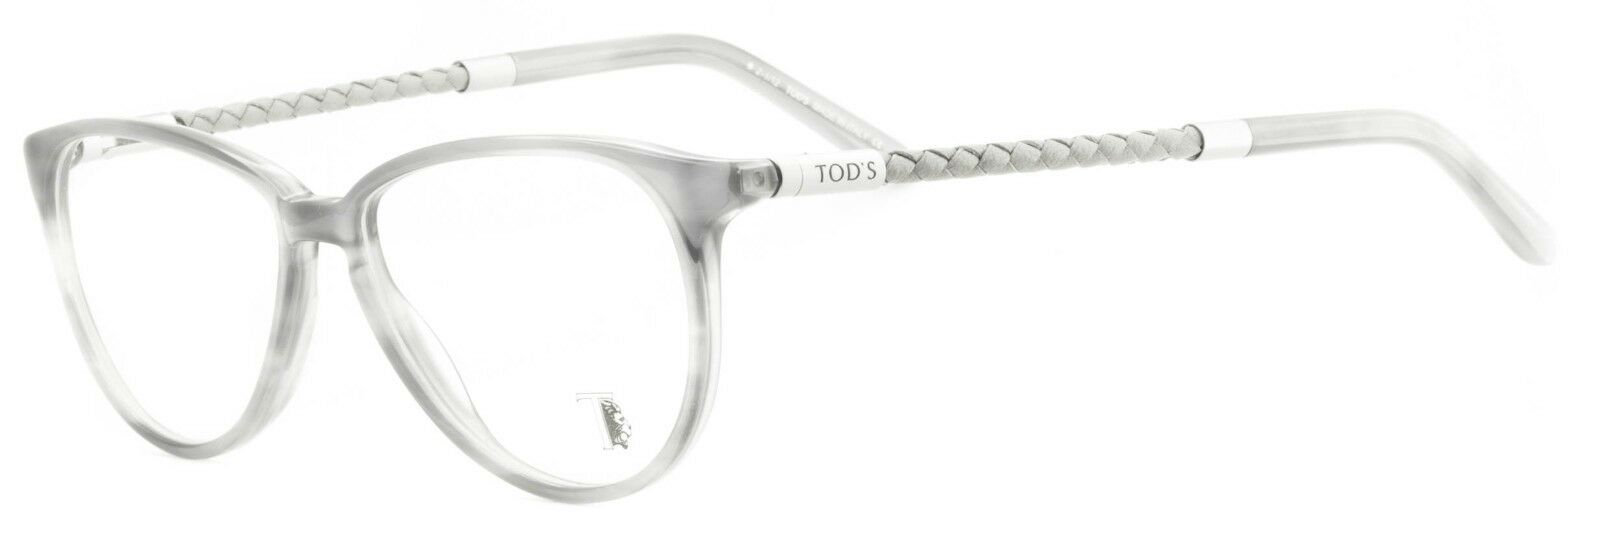 TOD'S TO5077 020 Eyewear FRAMES NEW Glasses RX Optical Eyeglasses Italy - BNIB